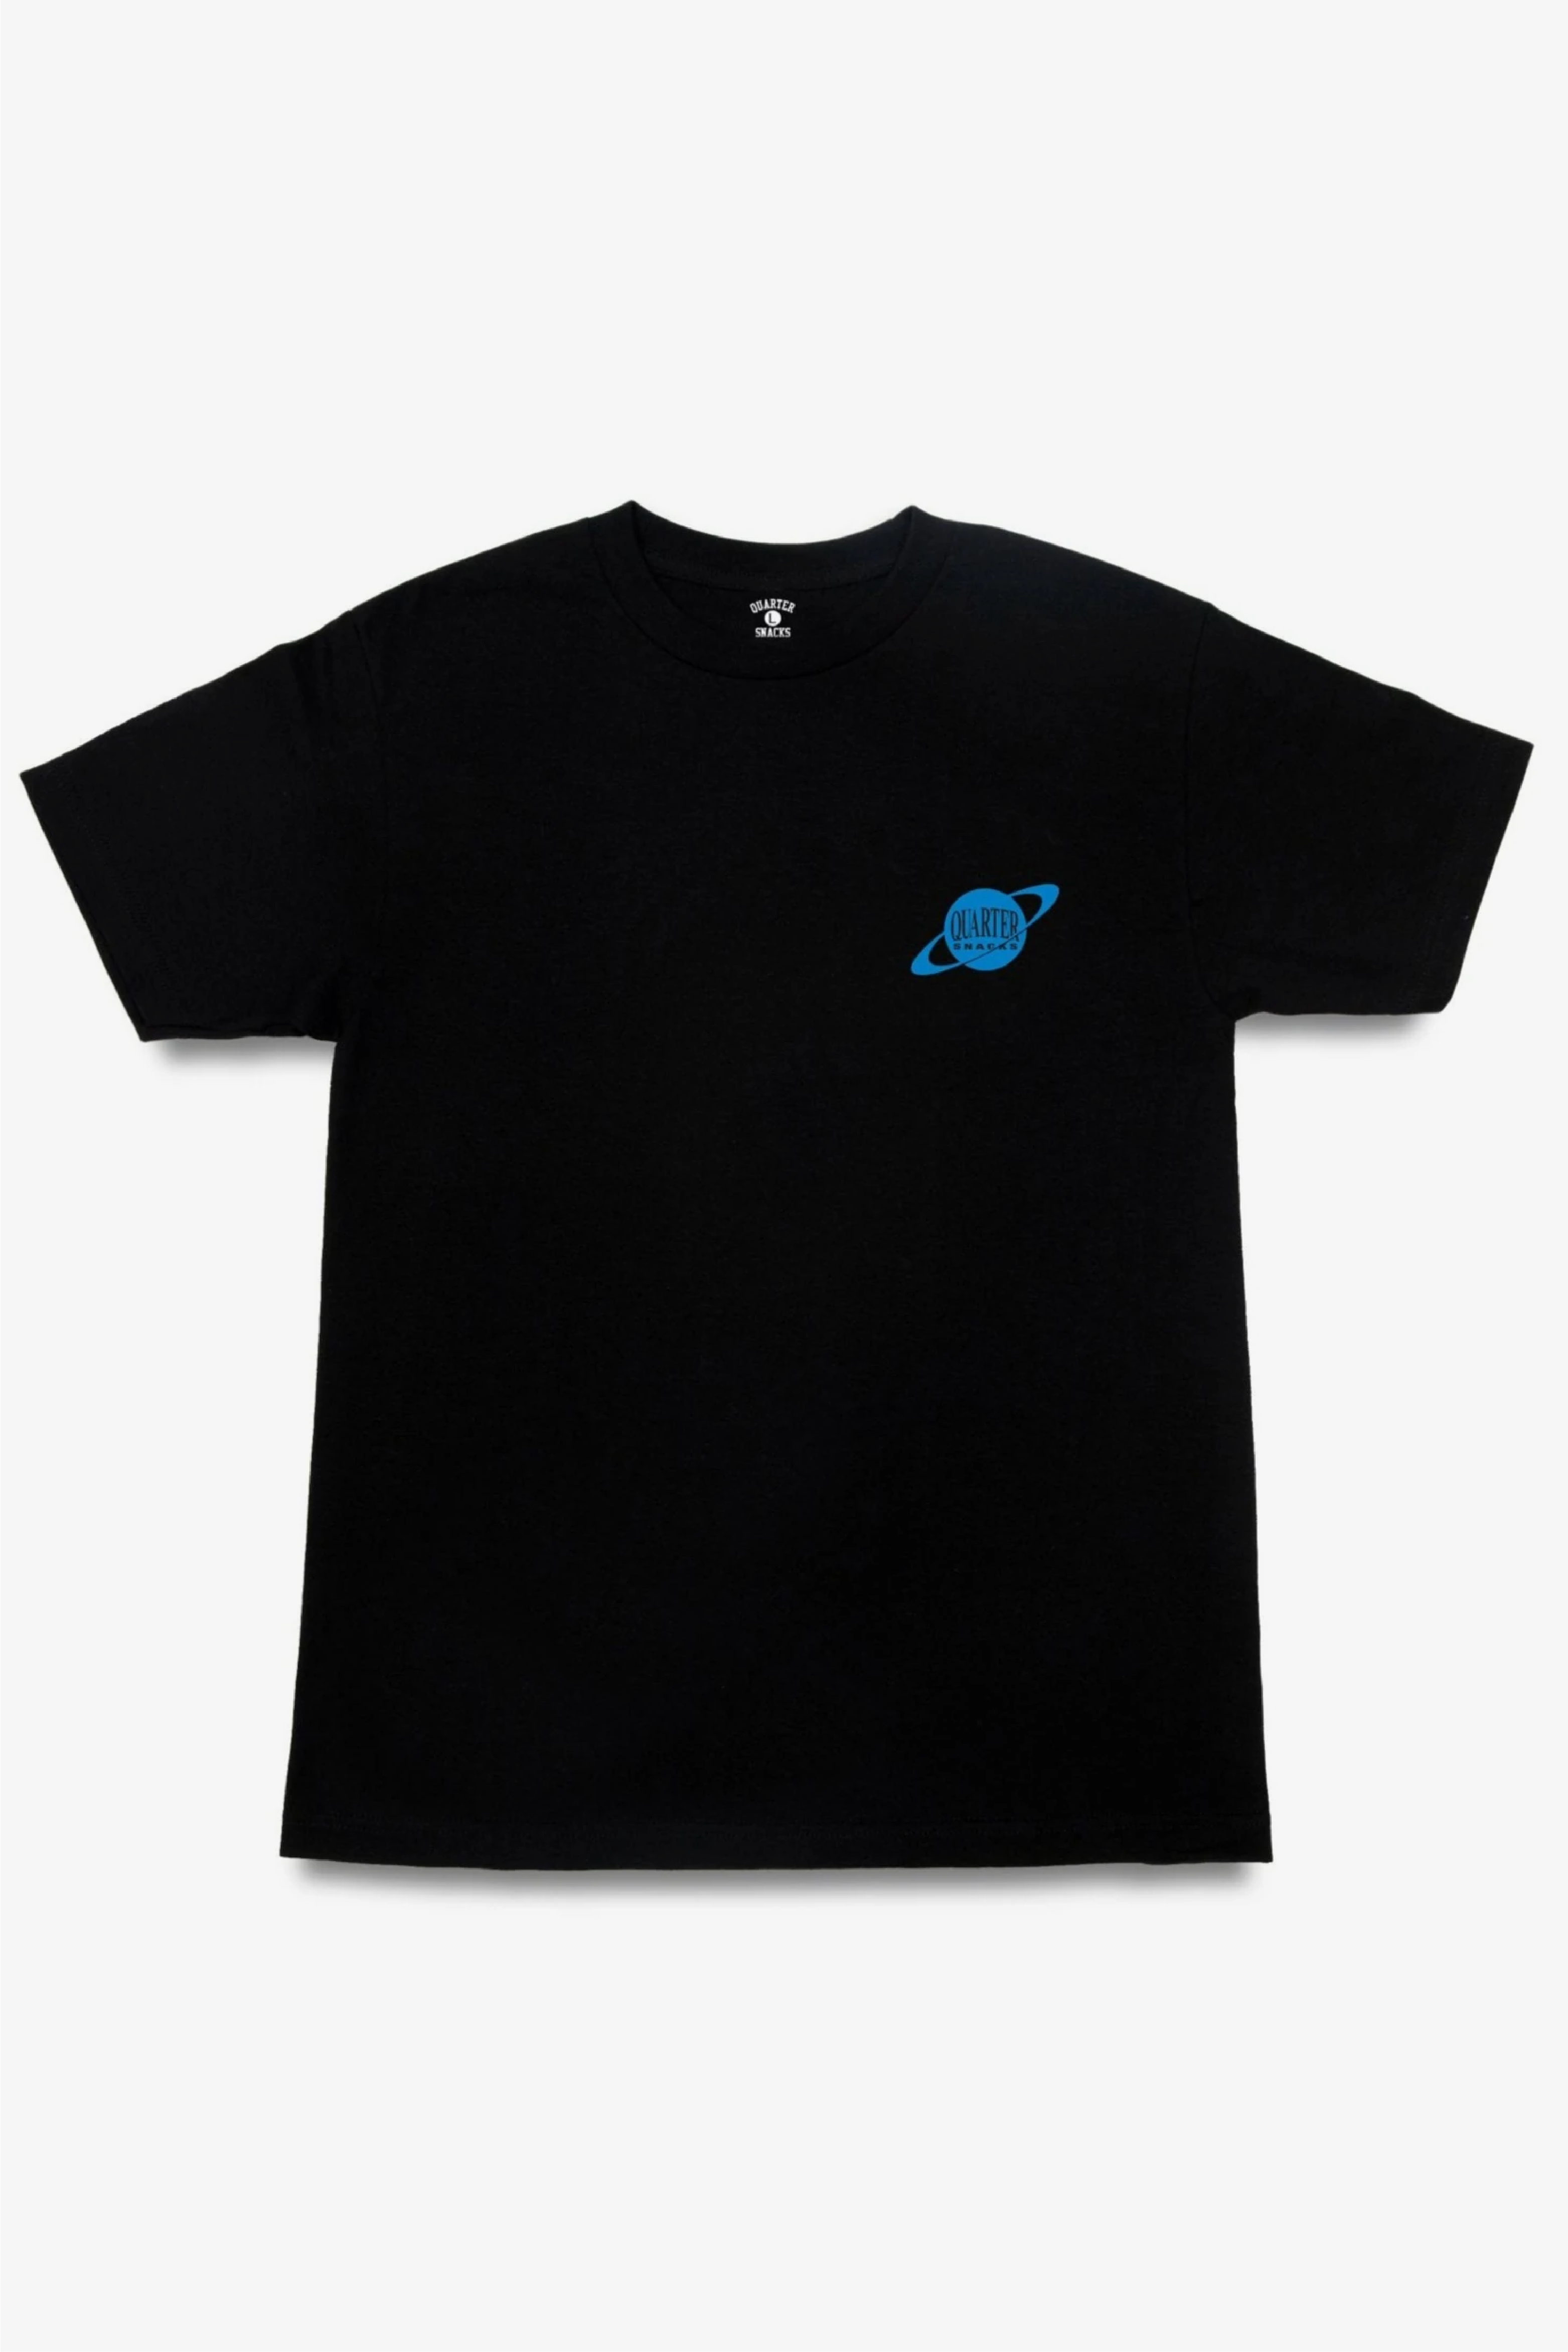 Selectshop FRAME - QUARTER SNACKS Spaceman Tee T-Shirts Dubai